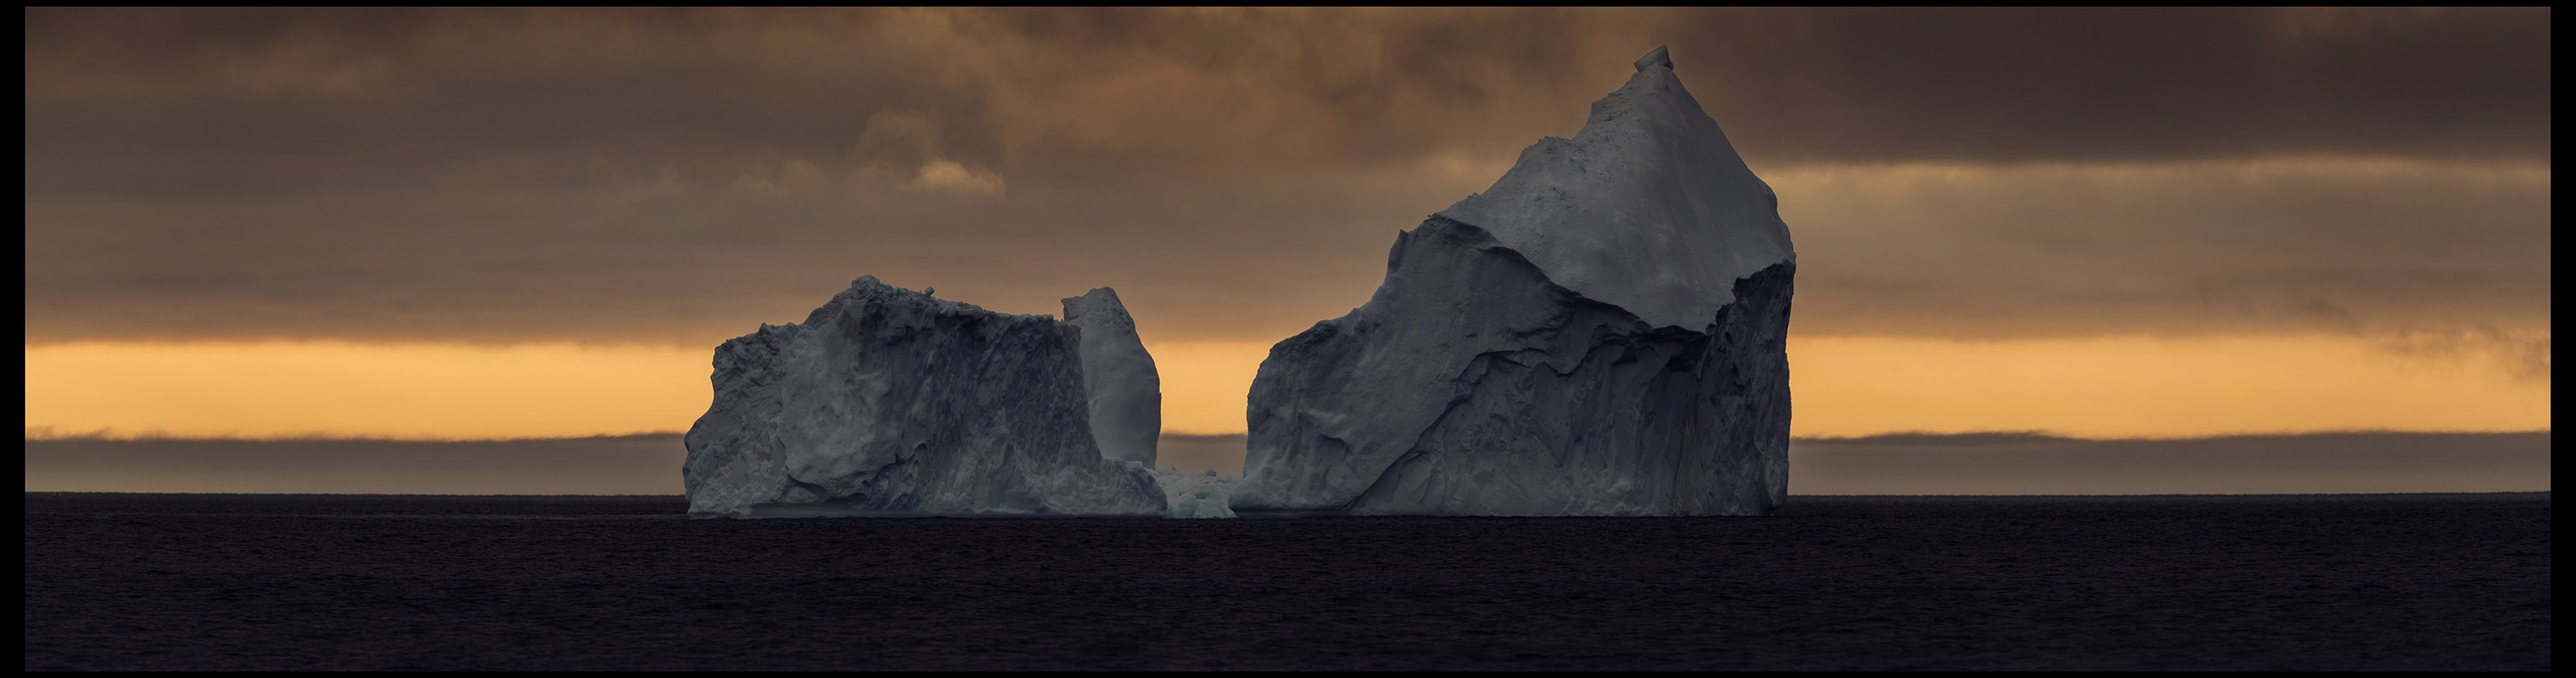 iceberg_ferryland_april2017-Pano-02clrlr